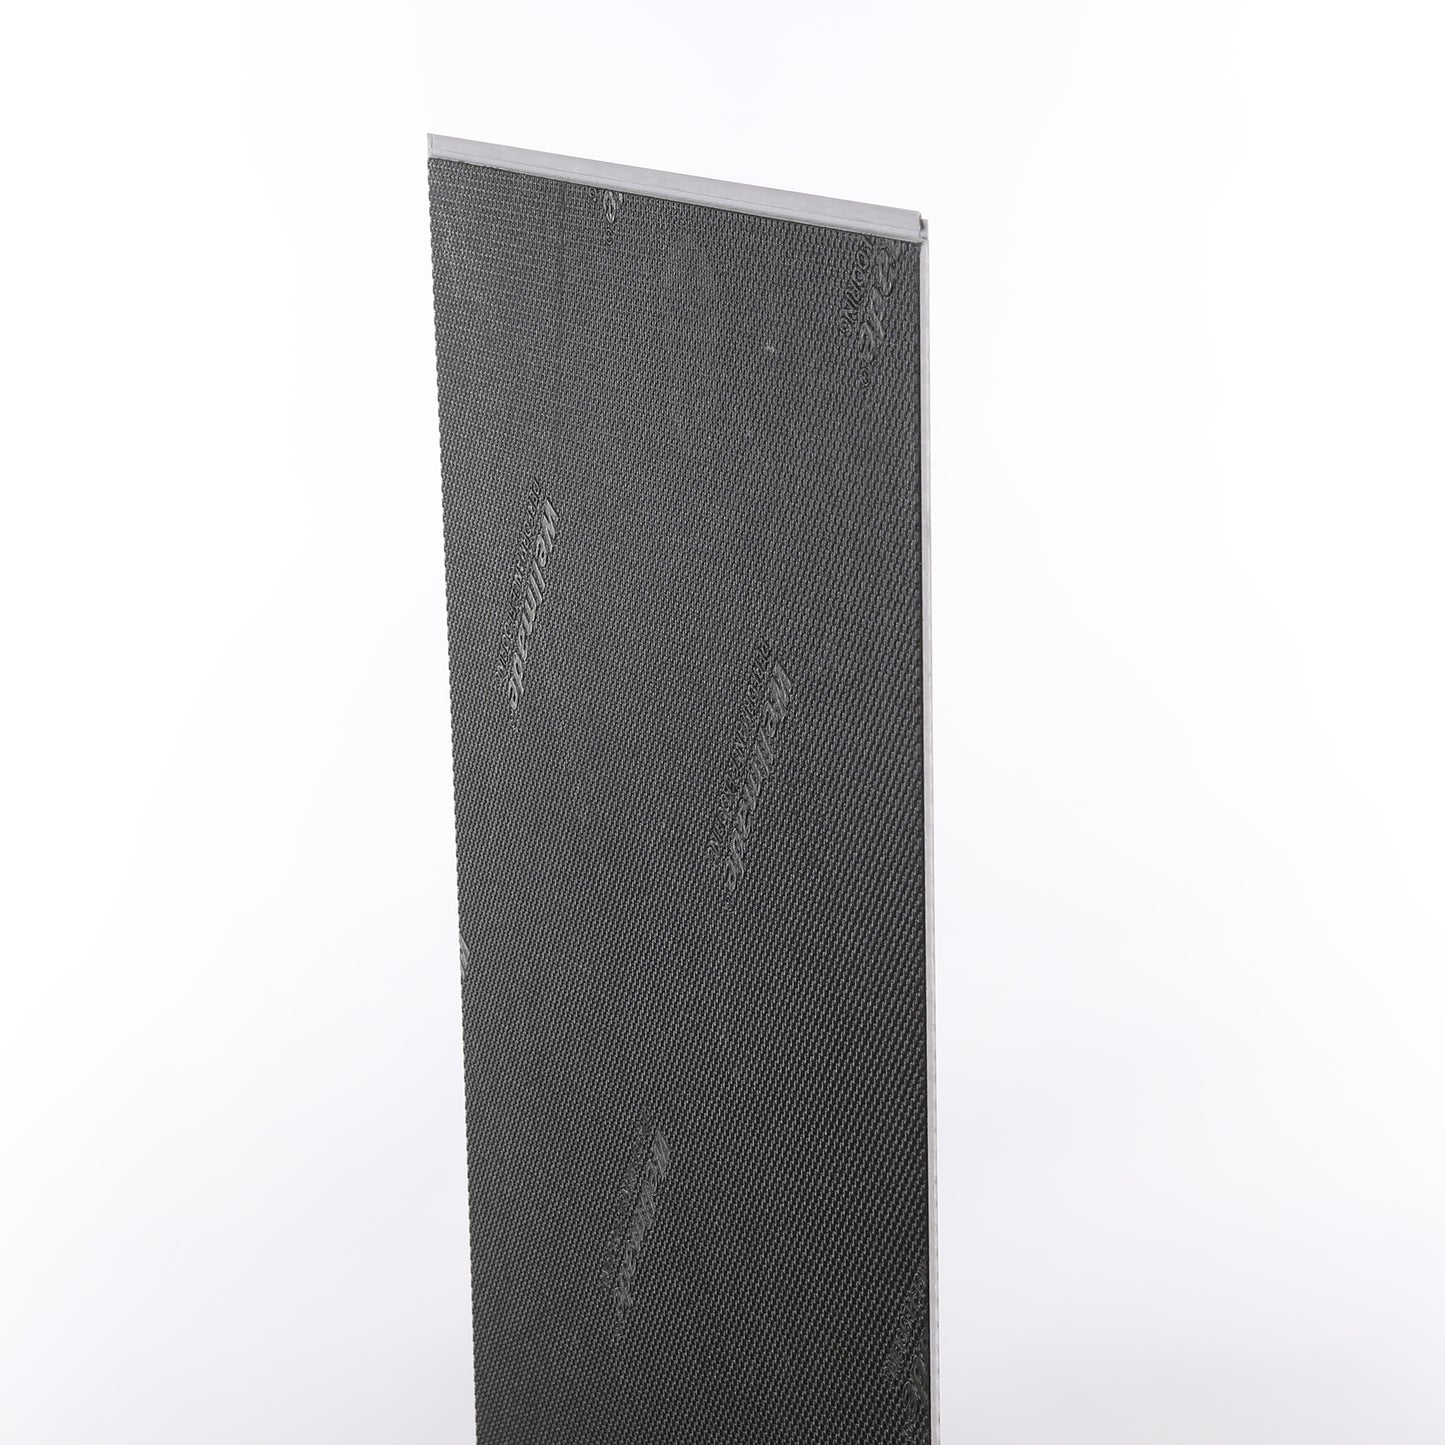 6mm Torcello Travertine HDPC® Waterproof Luxury Vinyl Tile Flooring 12 in. Wide x 24 in. Long